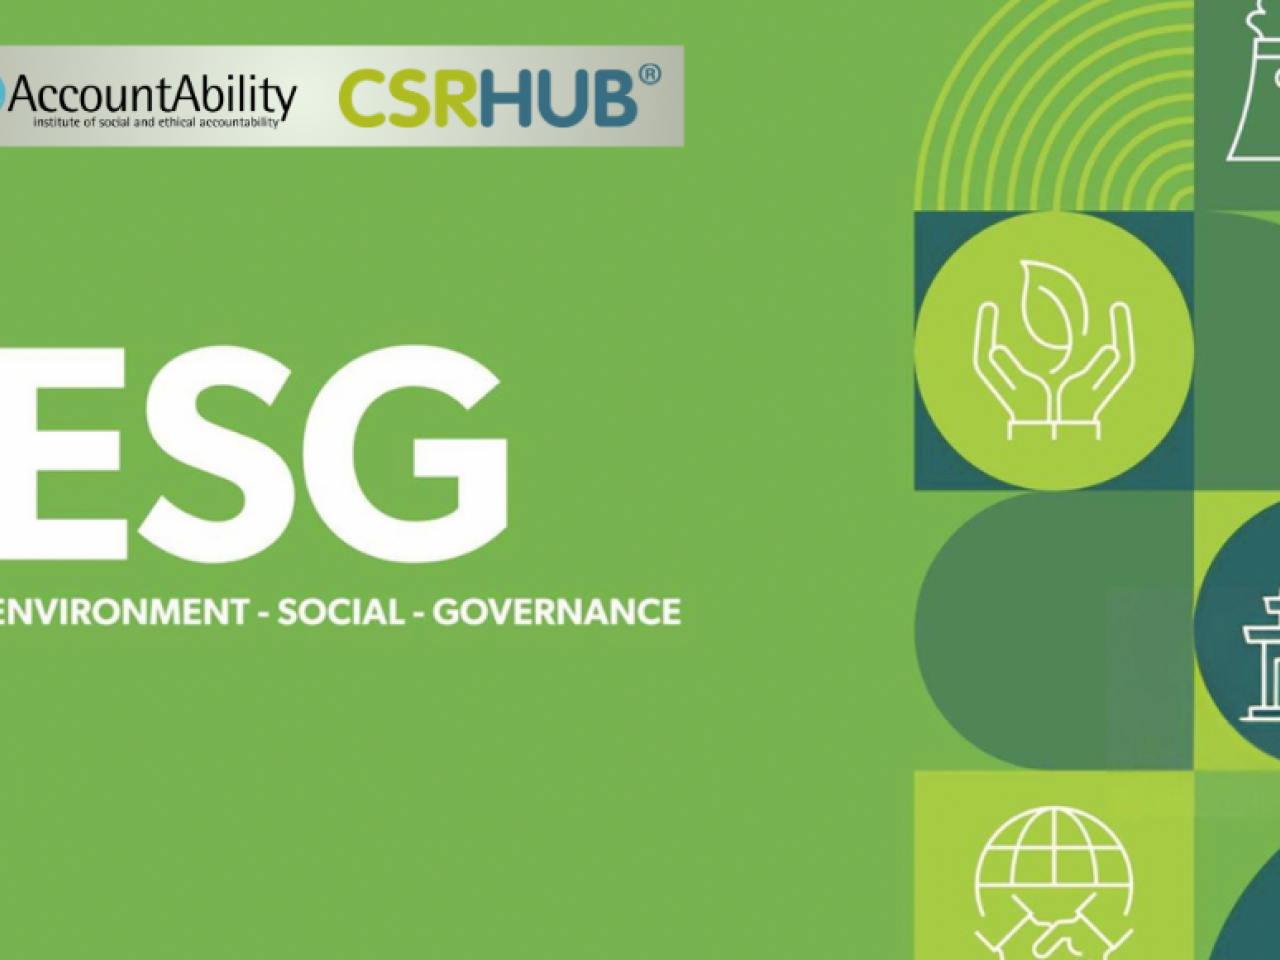 AccountAbility and CSRHub ESG Banner Image